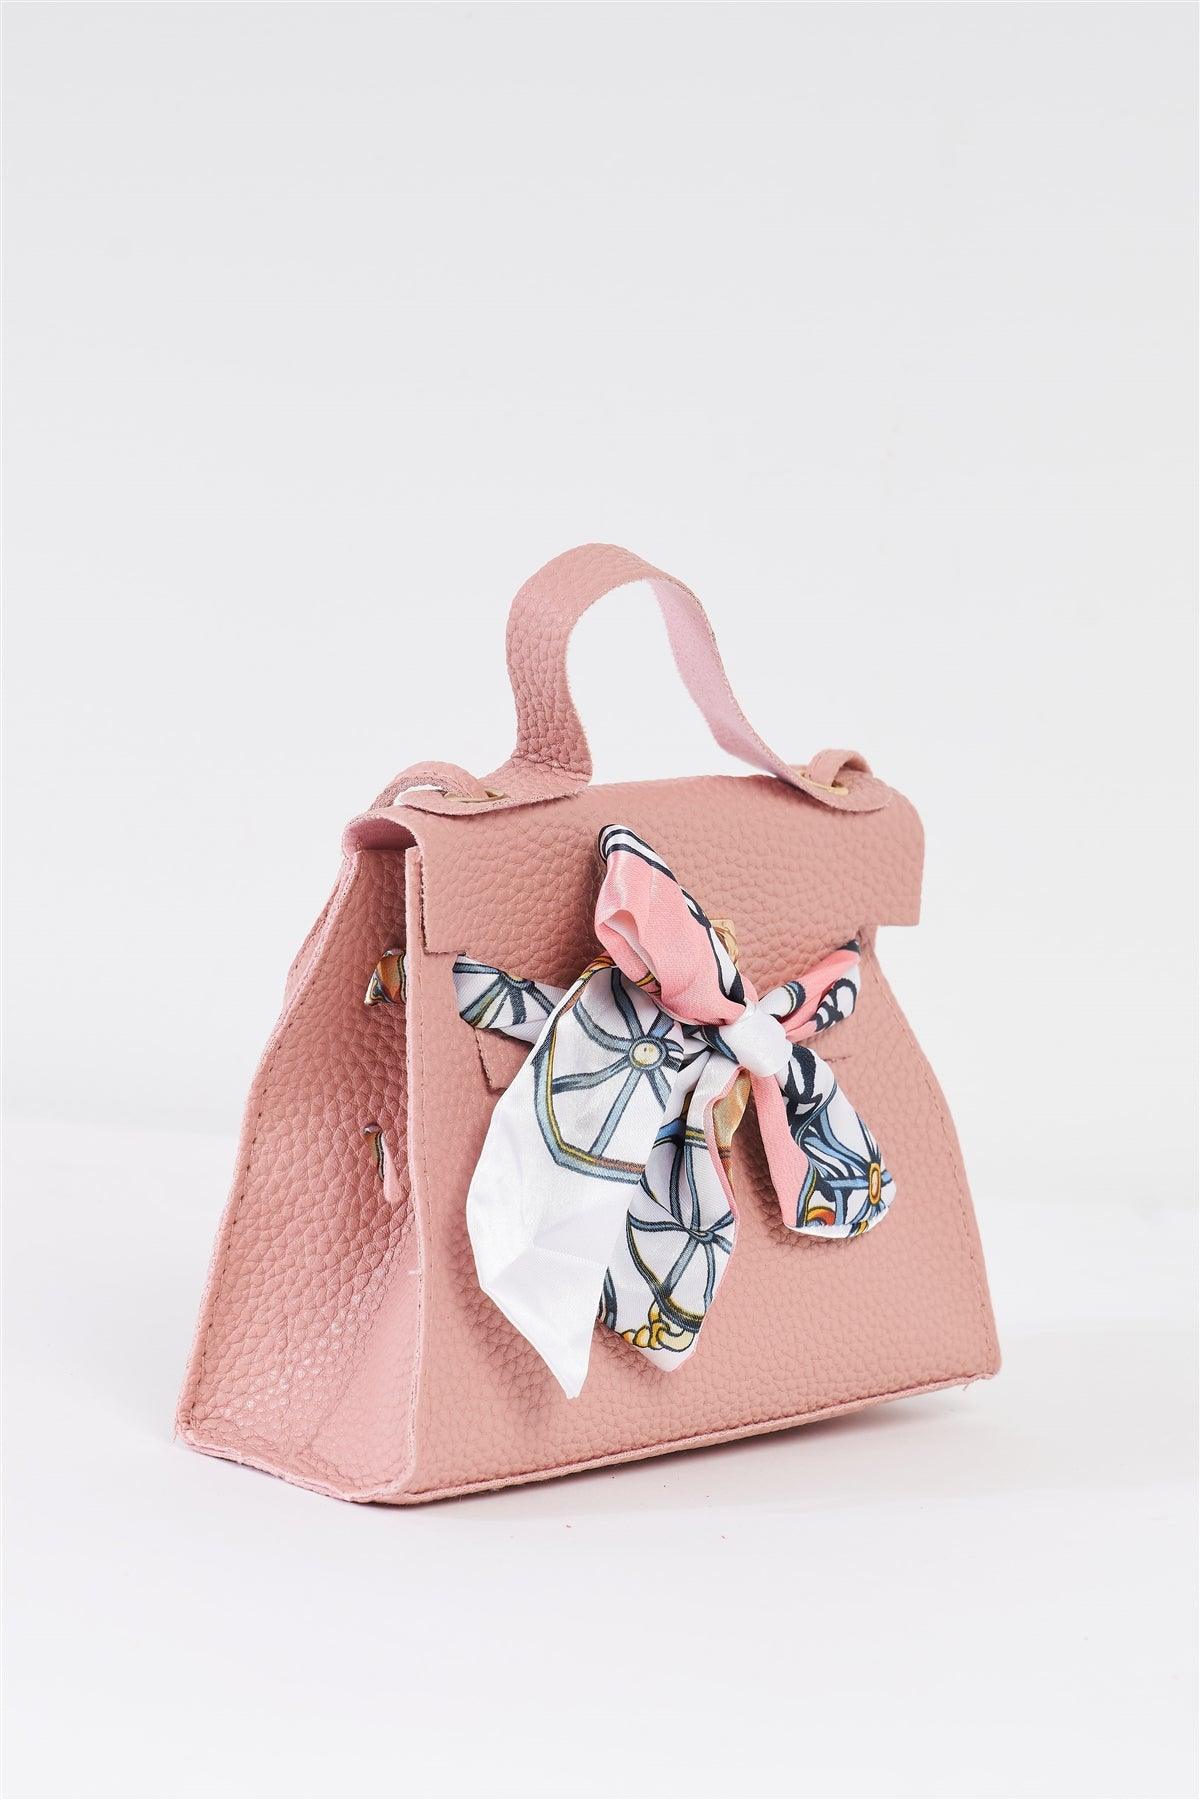 Mauve Textured Pleather Satin Printed Twilly Scarf Detail Flap Satchel Handbag /3 Bags